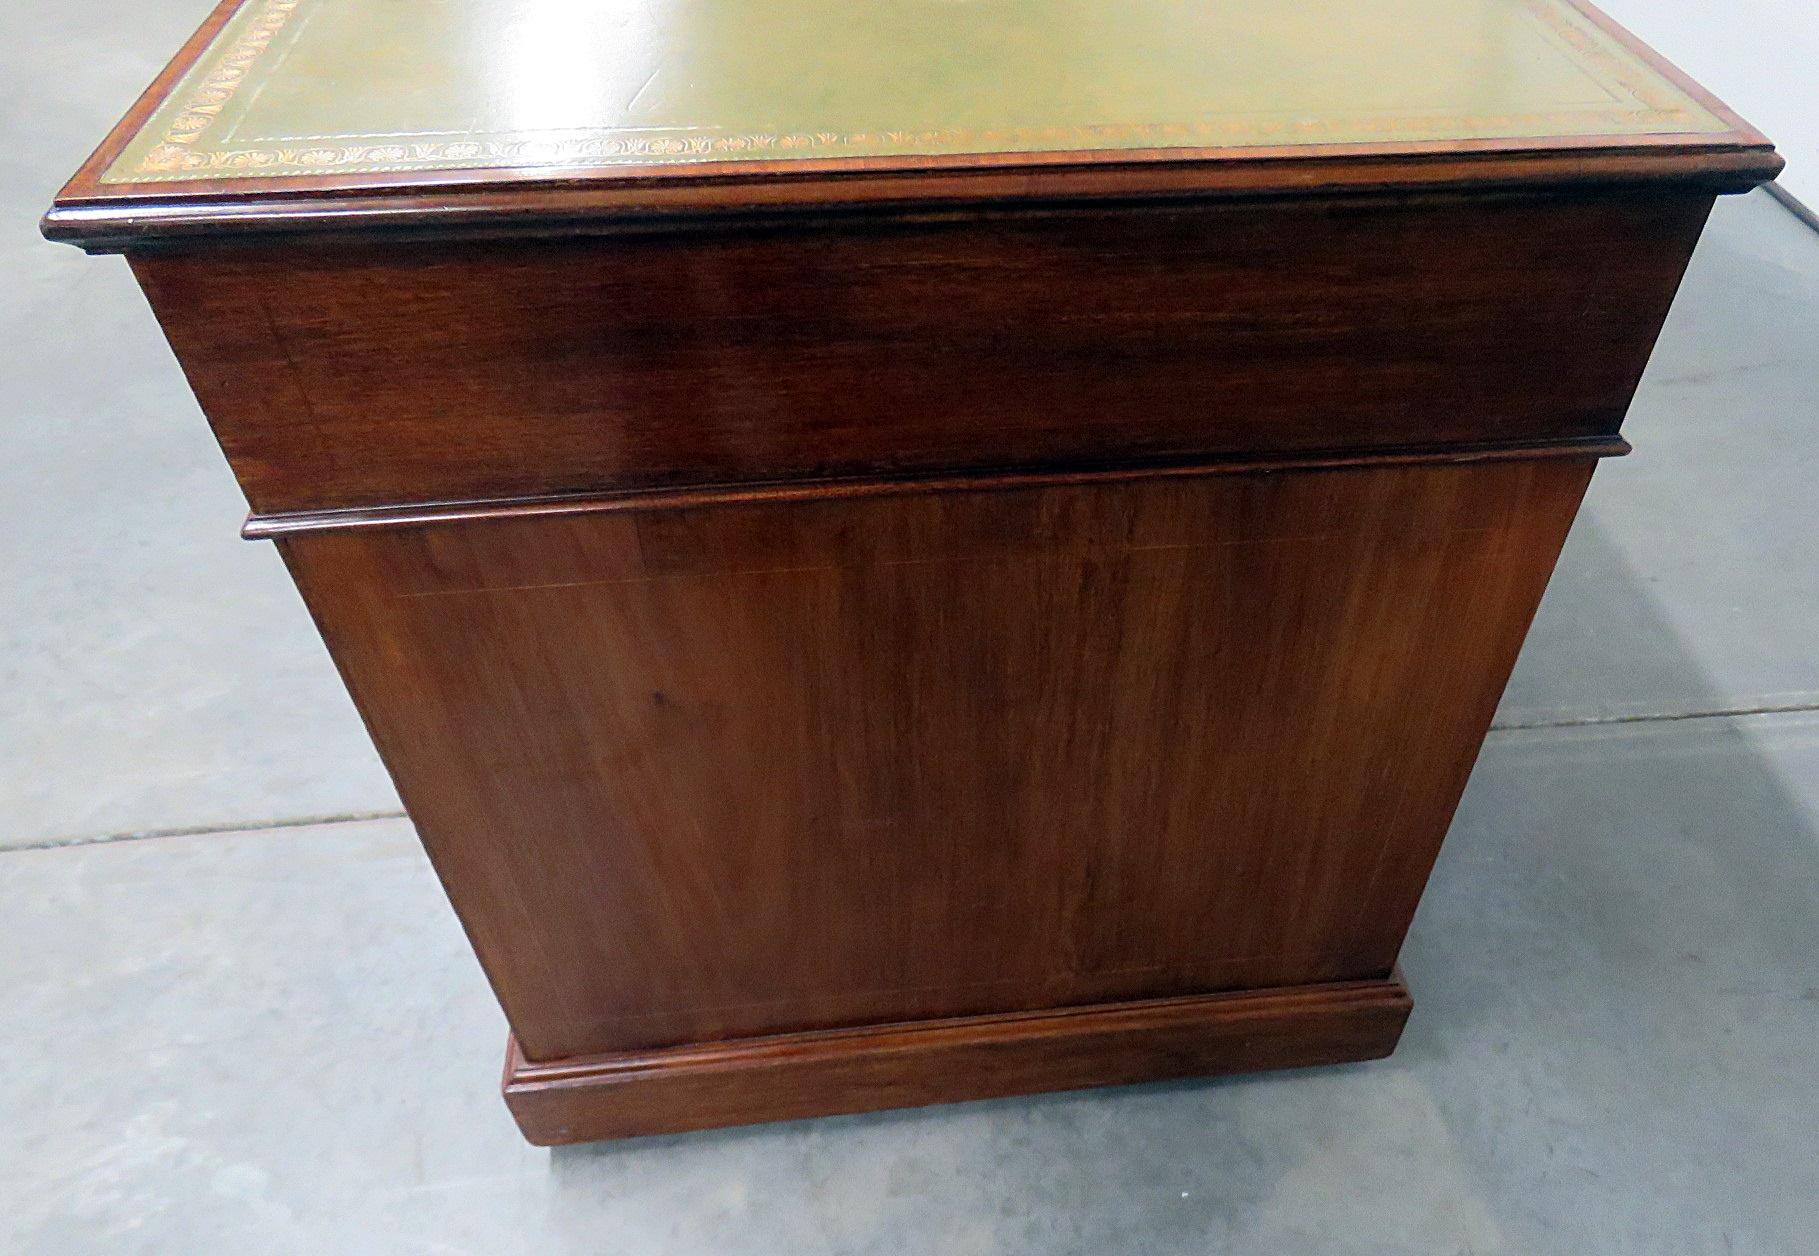 Antique Inlaid Leather Top Desk 1